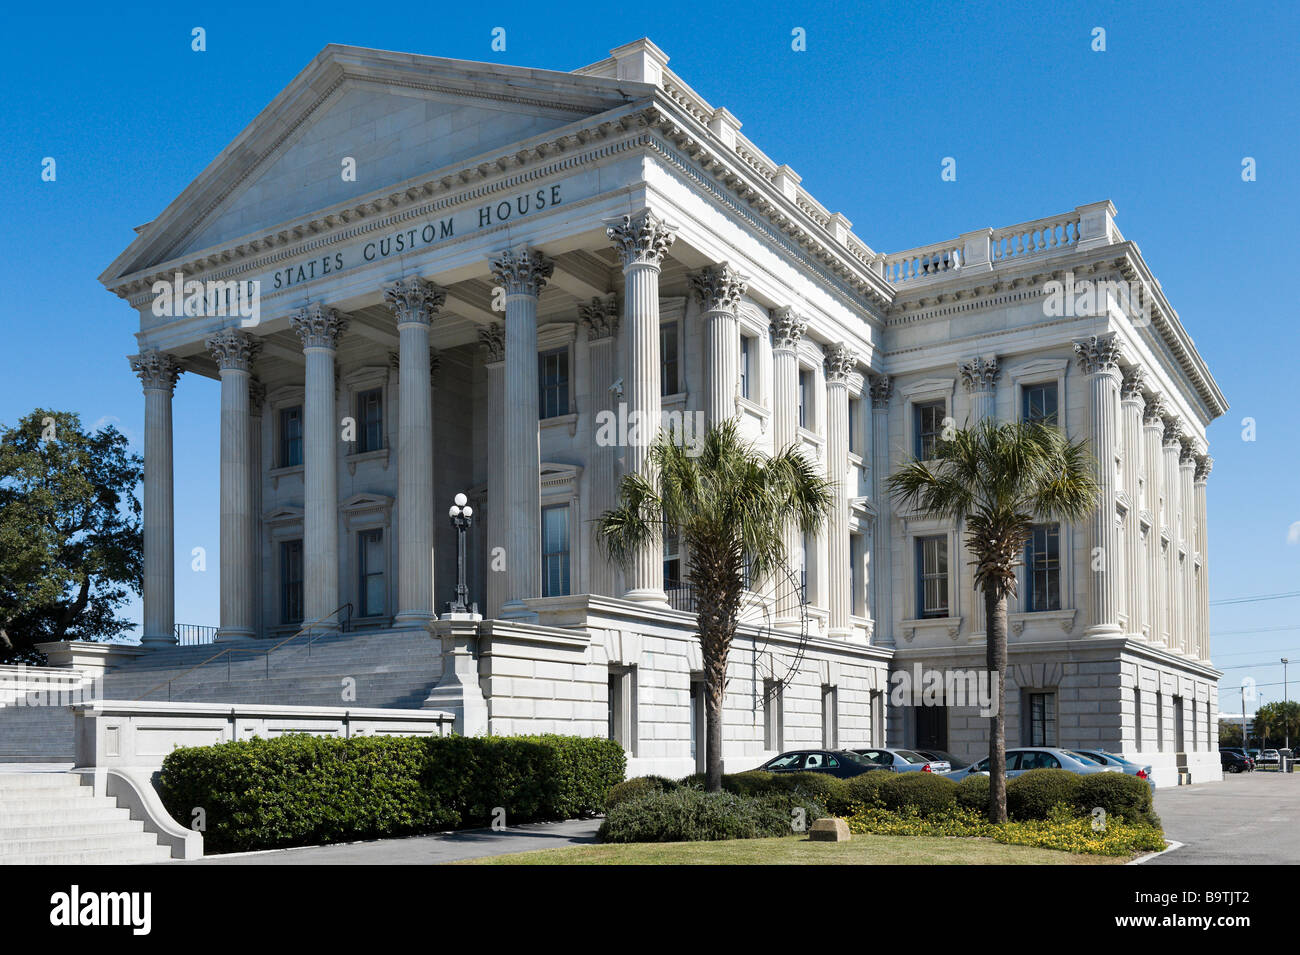 United States Cusom House dans le quartier historique, East Bay Street, Charleston, Caroline du Sud, USA Banque D'Images